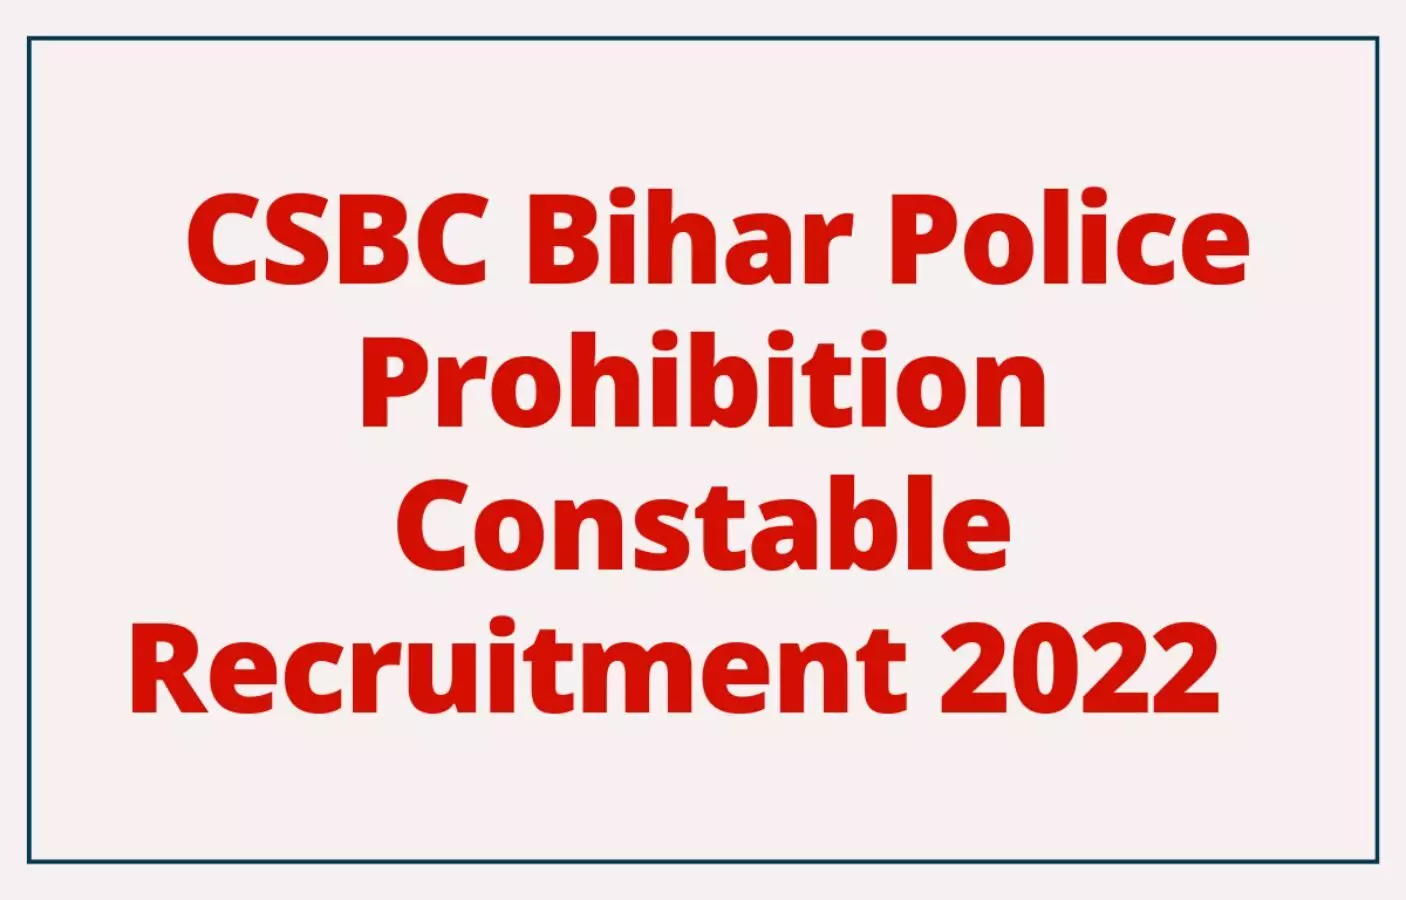 CSBC Recruitment 2022 notification vacancy details eligibility criteria age limit sarkari naukri latest job